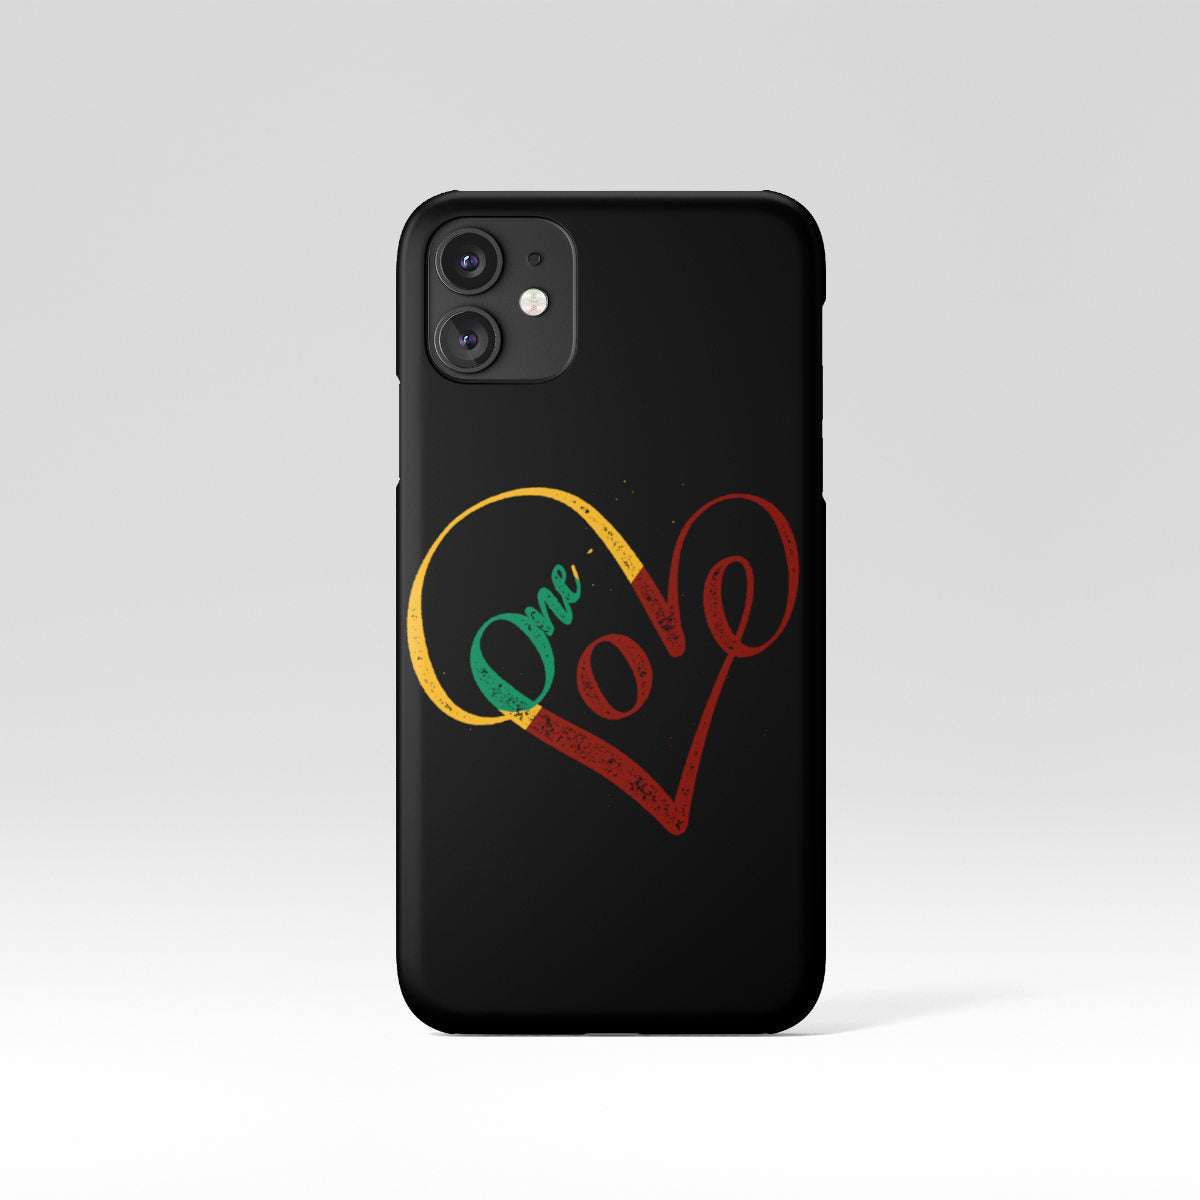 One love, one heart phone case